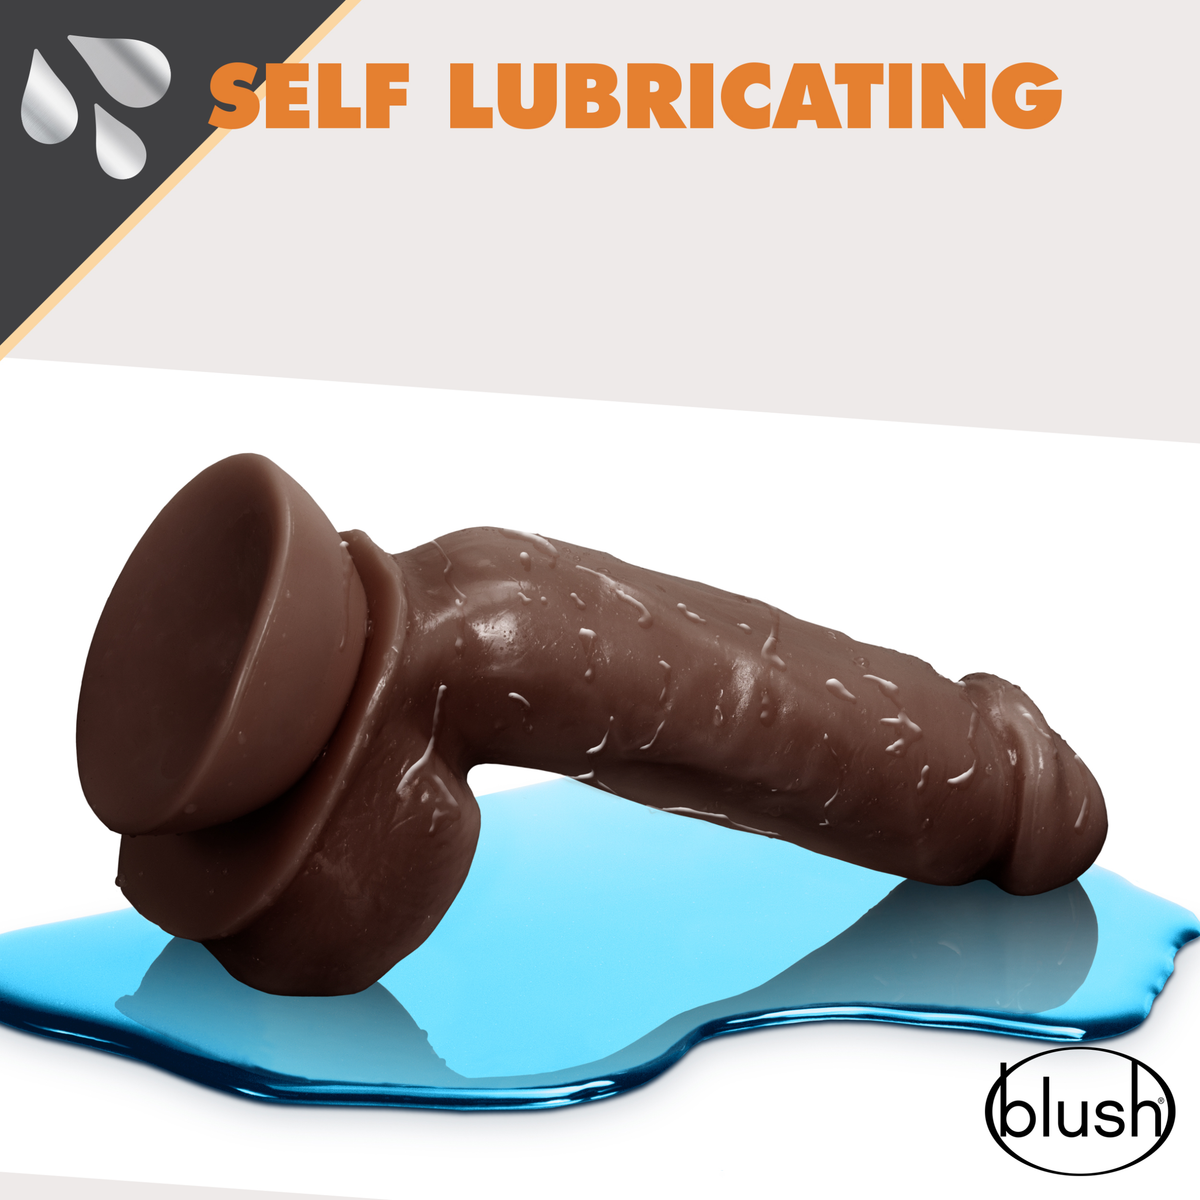 dr skin glide 8 5 inch self lubricating dildo lubricating dildo with balls chocolate